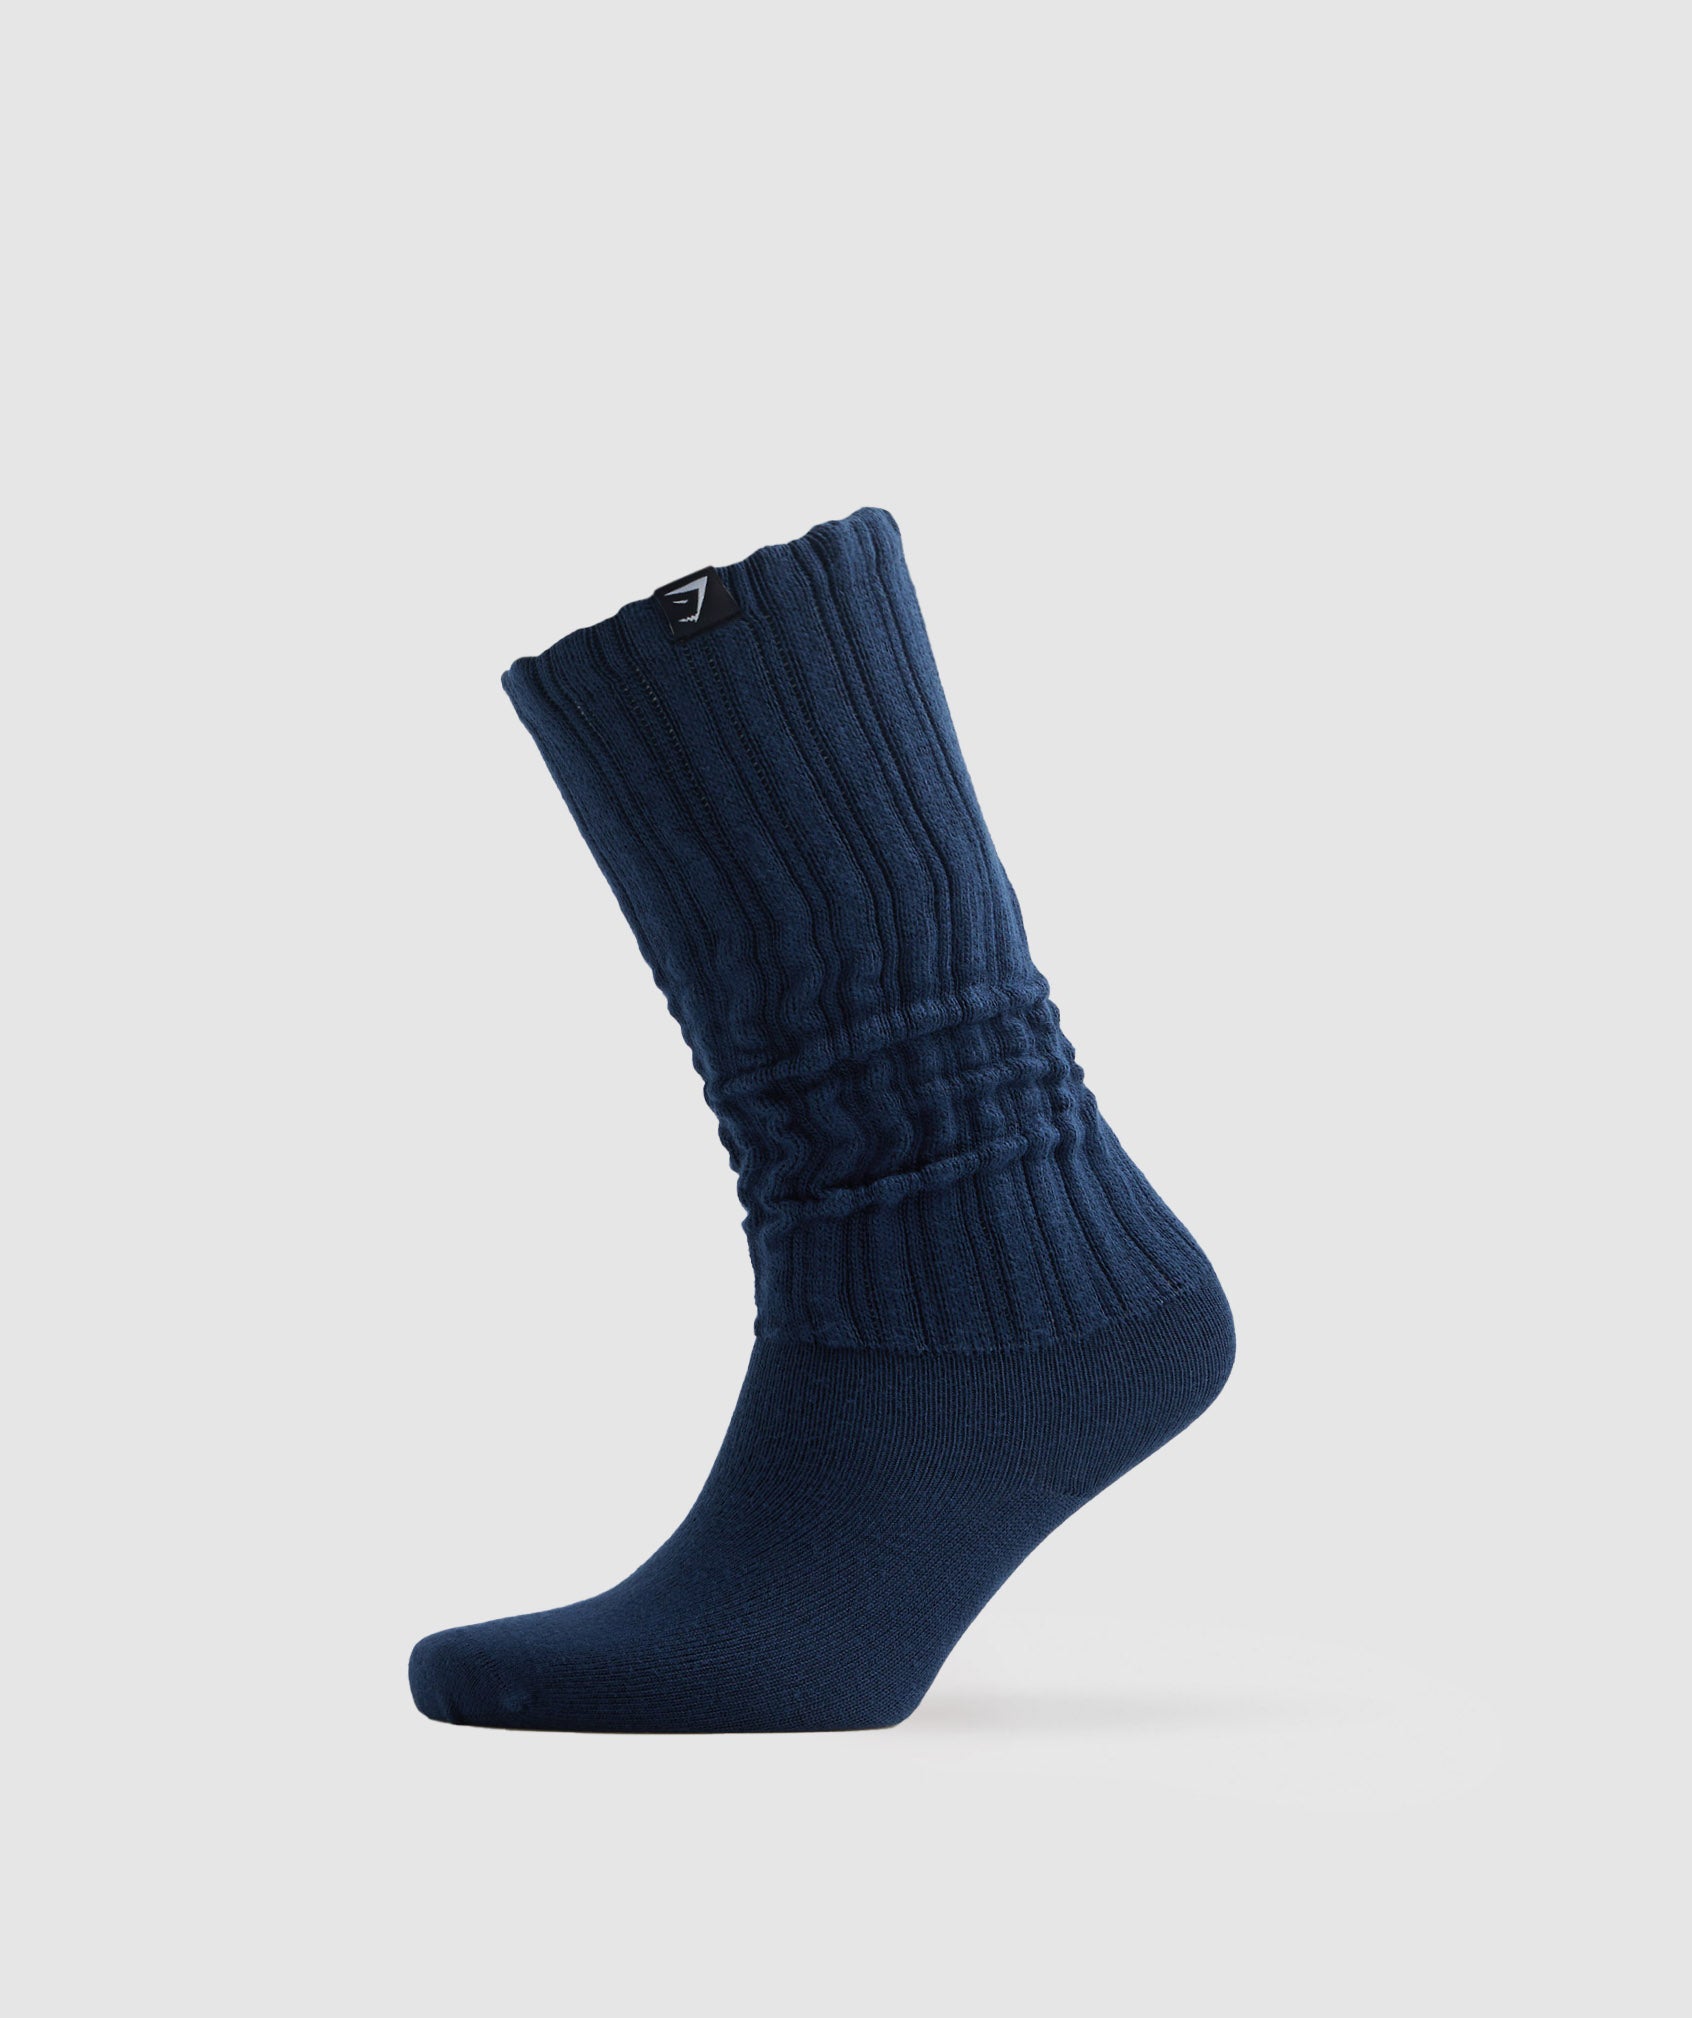 Reebok Underwear & Socks for Men - Poshmark